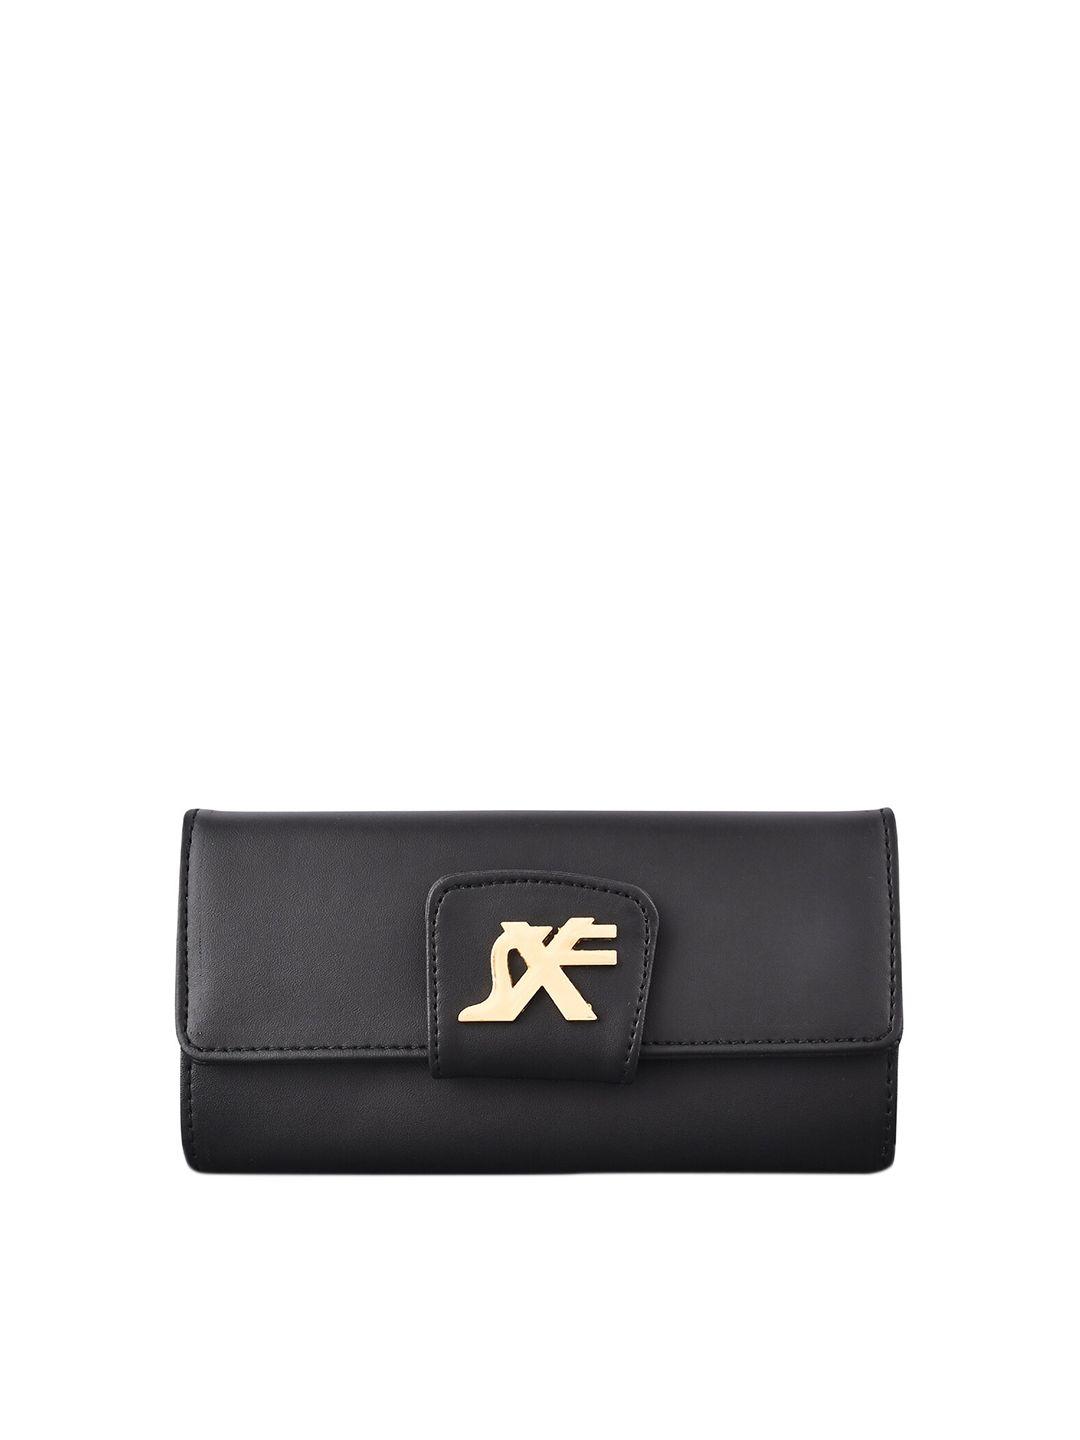 sxf speed x fashion black envelope clutch